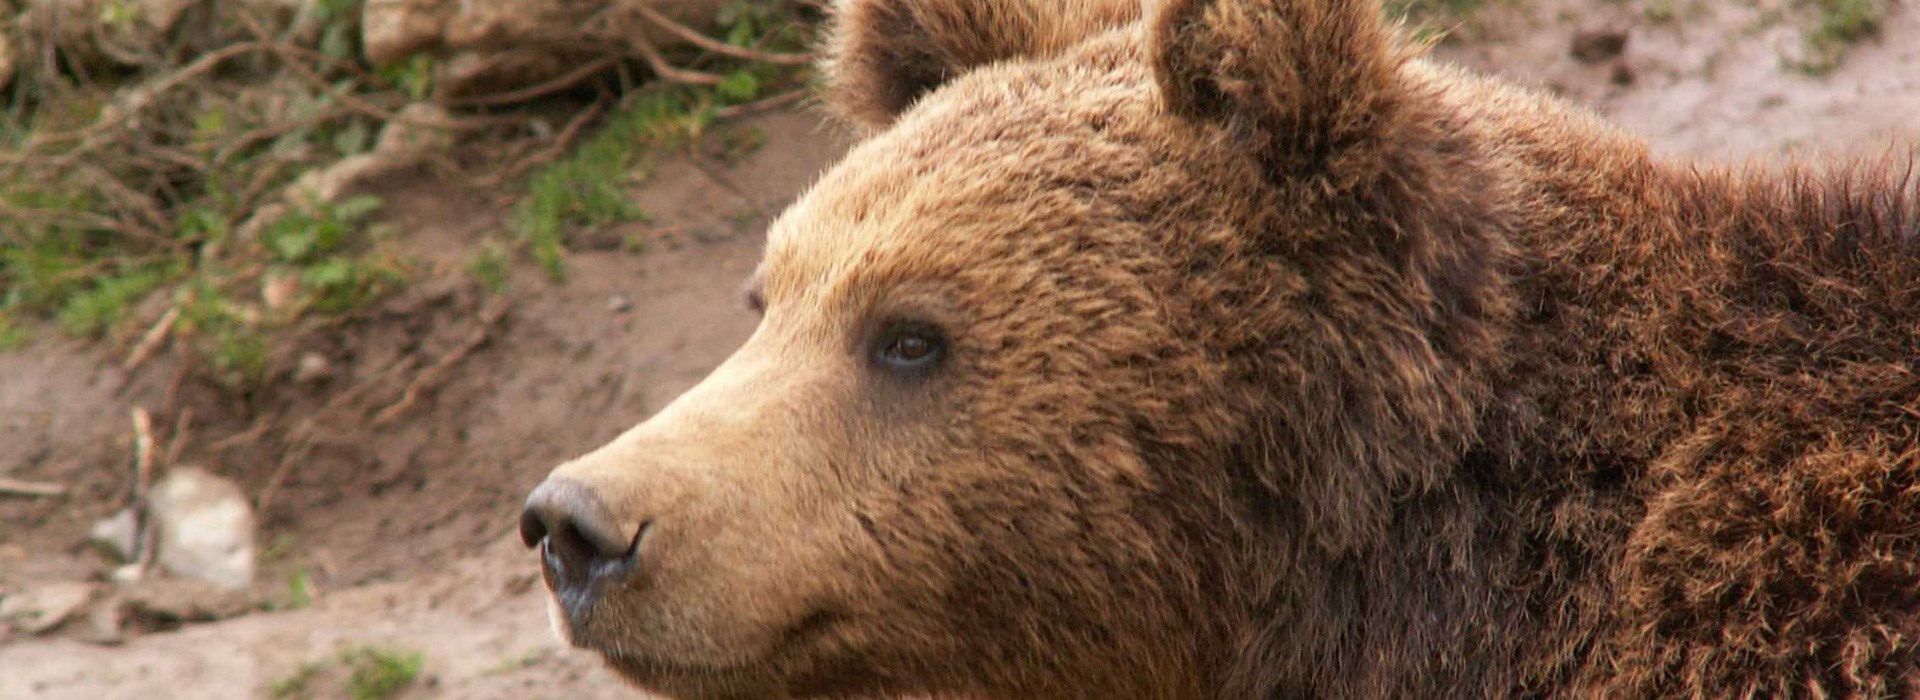 Visiter Le refuge des ours de Kuterevo - Croatie